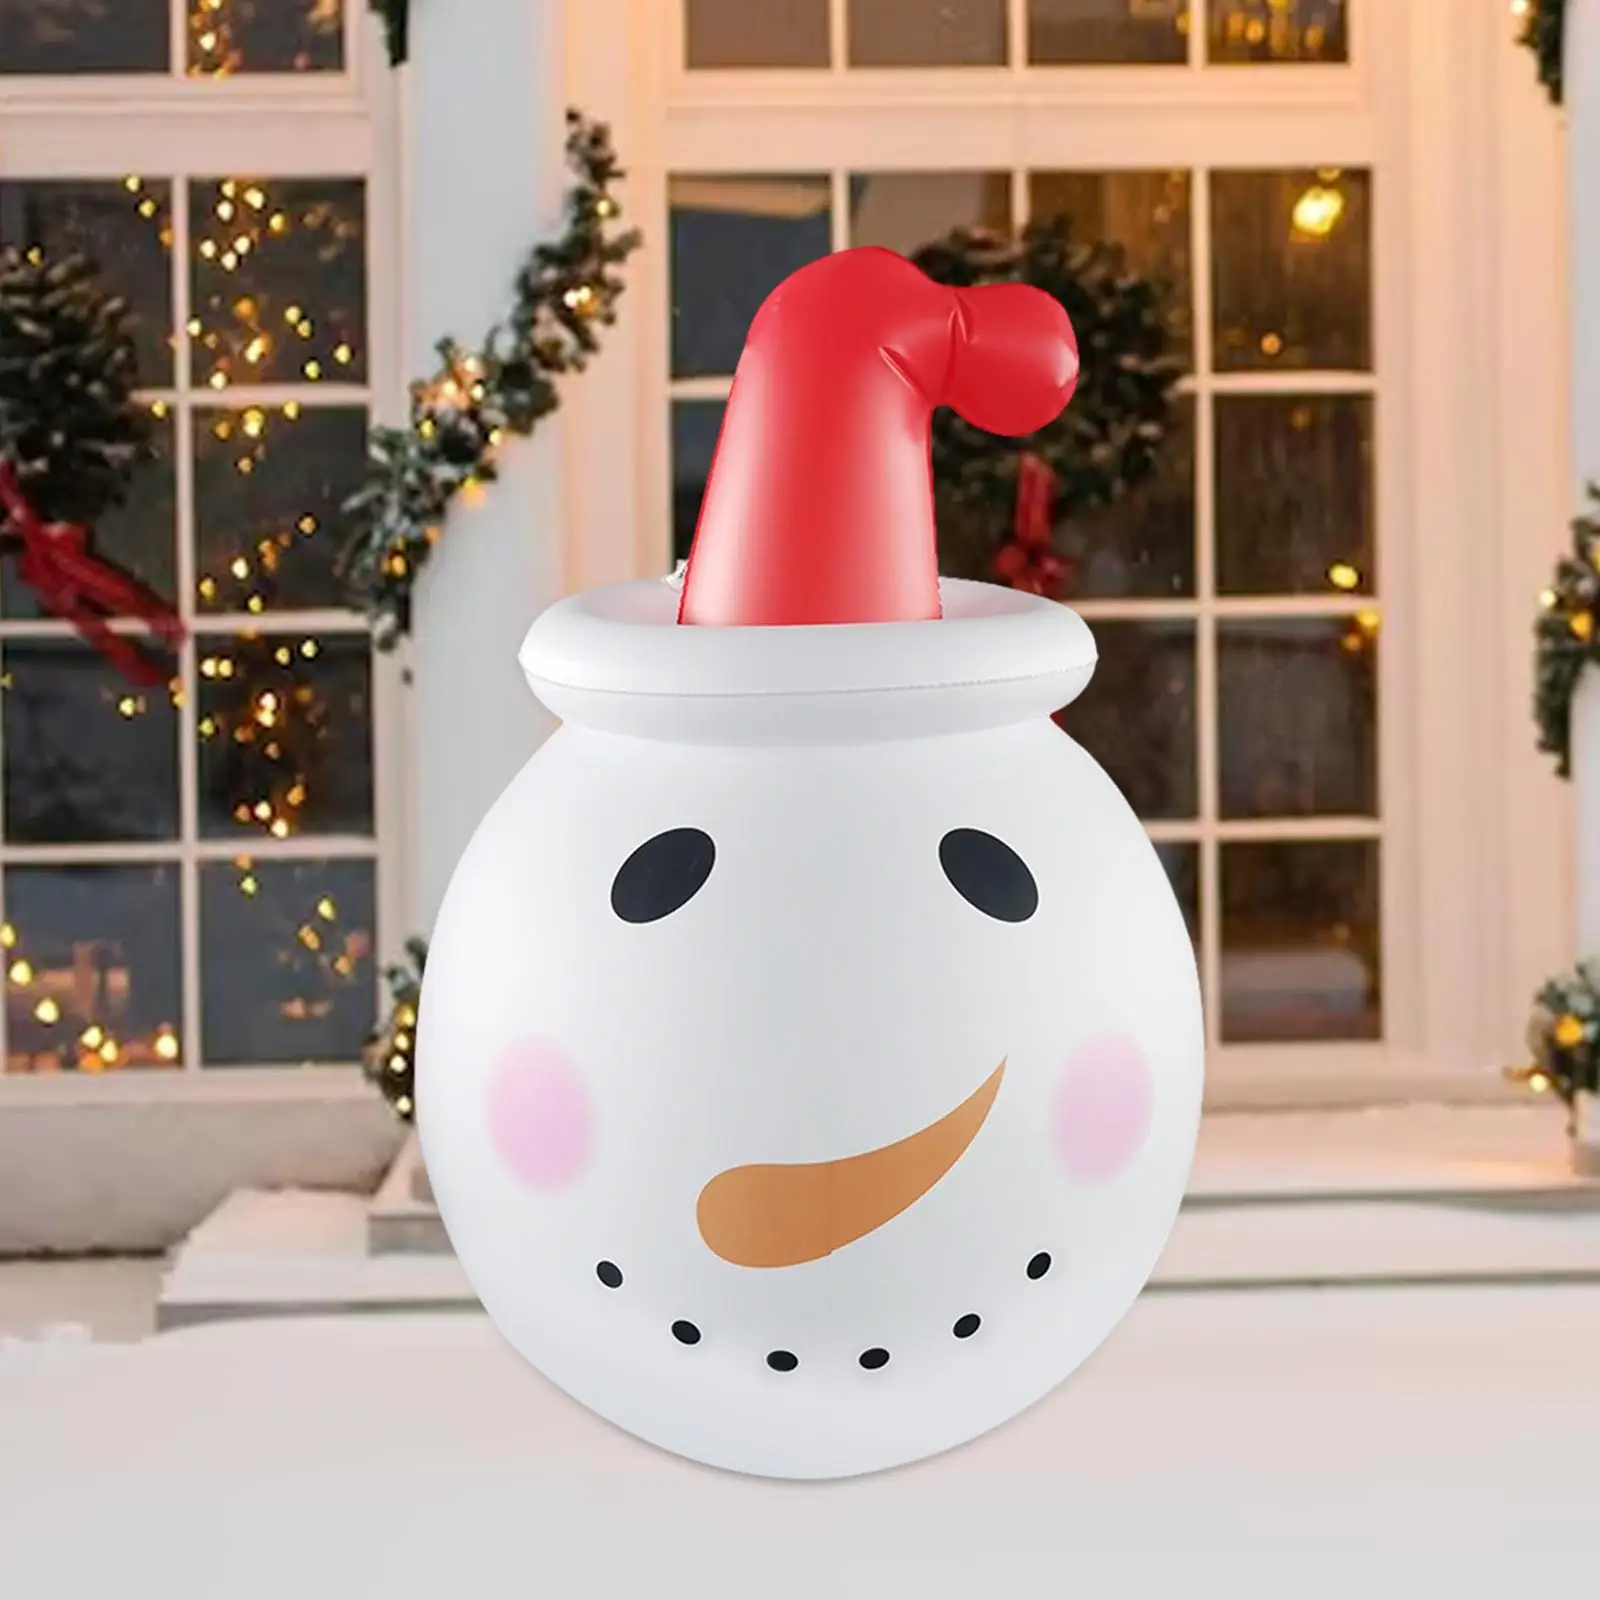 Christmas Inflatable Snowman Ornament Adorable LED Lights Xmas Snowball Decor for Restaurant Yard Xmas Party Apartment Halloween